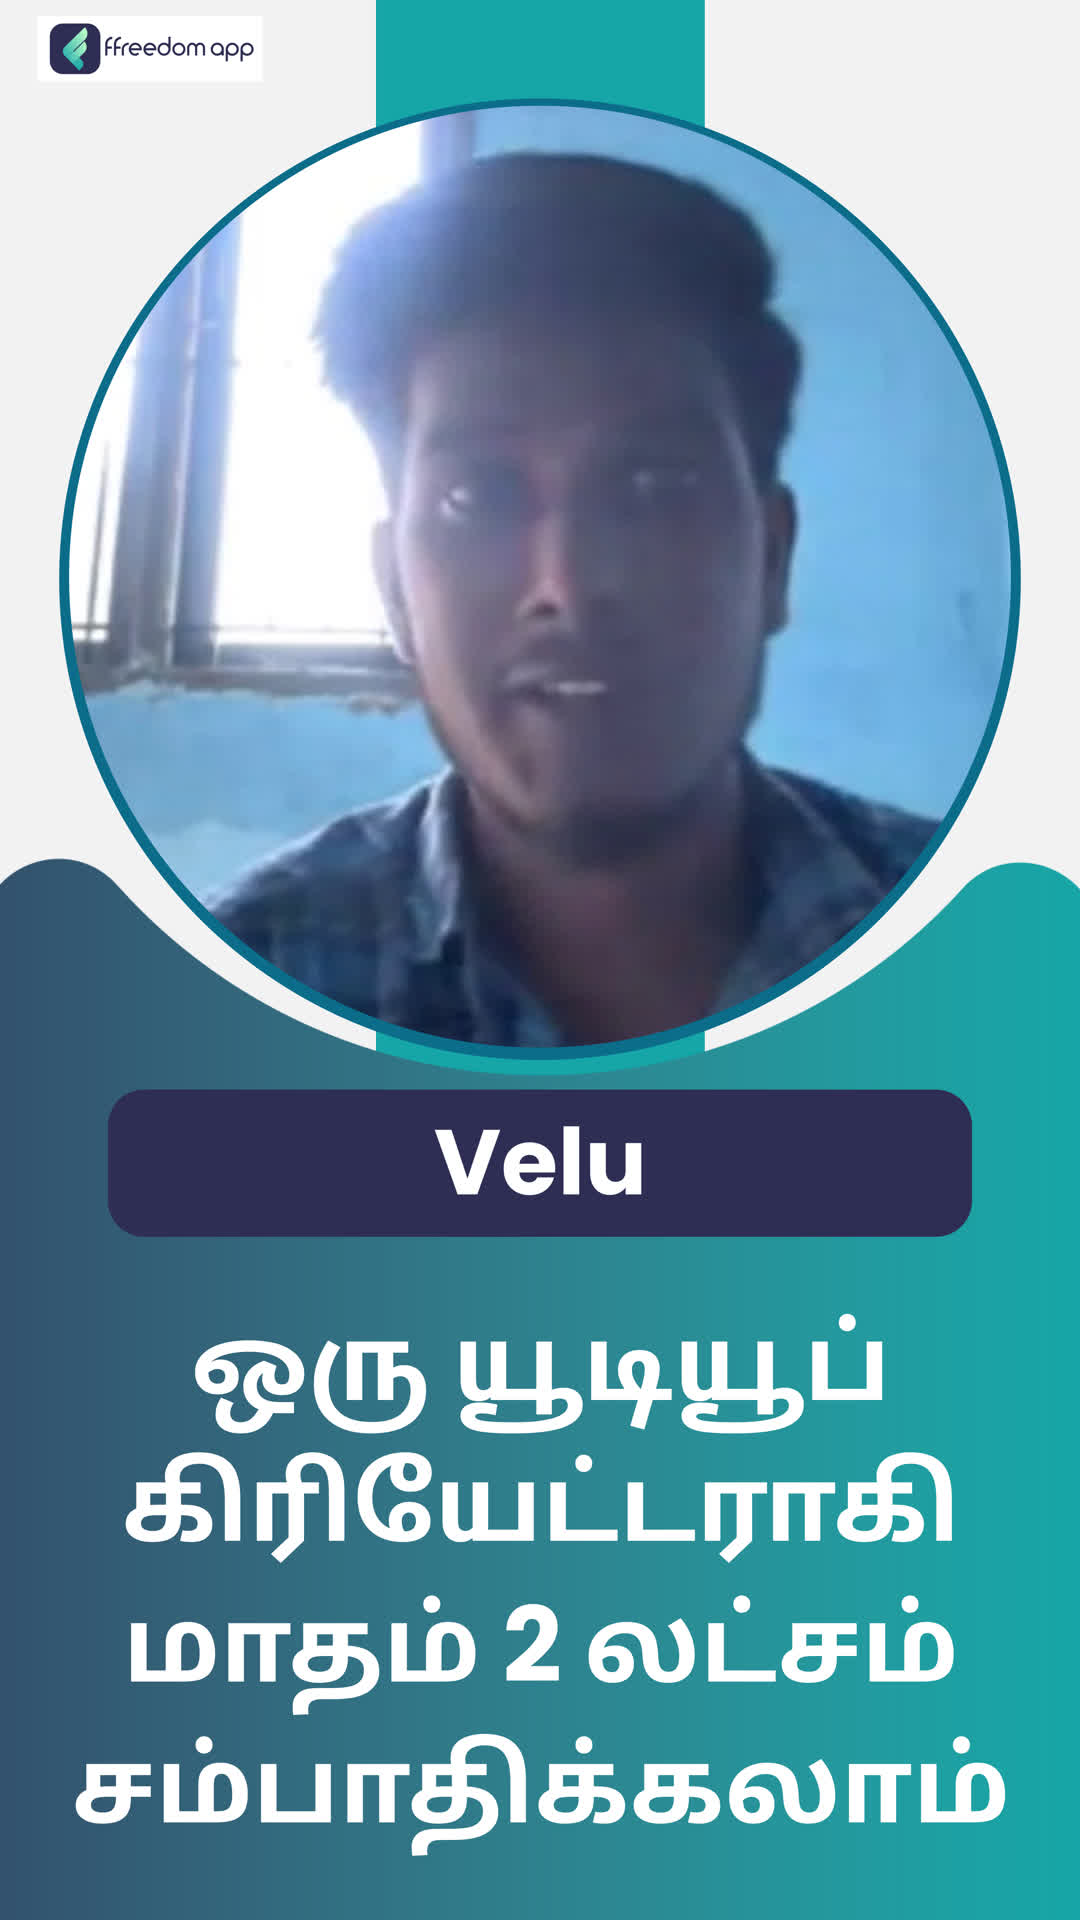 velu's Honest Review of ffreedom app - Tiruvannamalai ,Tamil Nadu